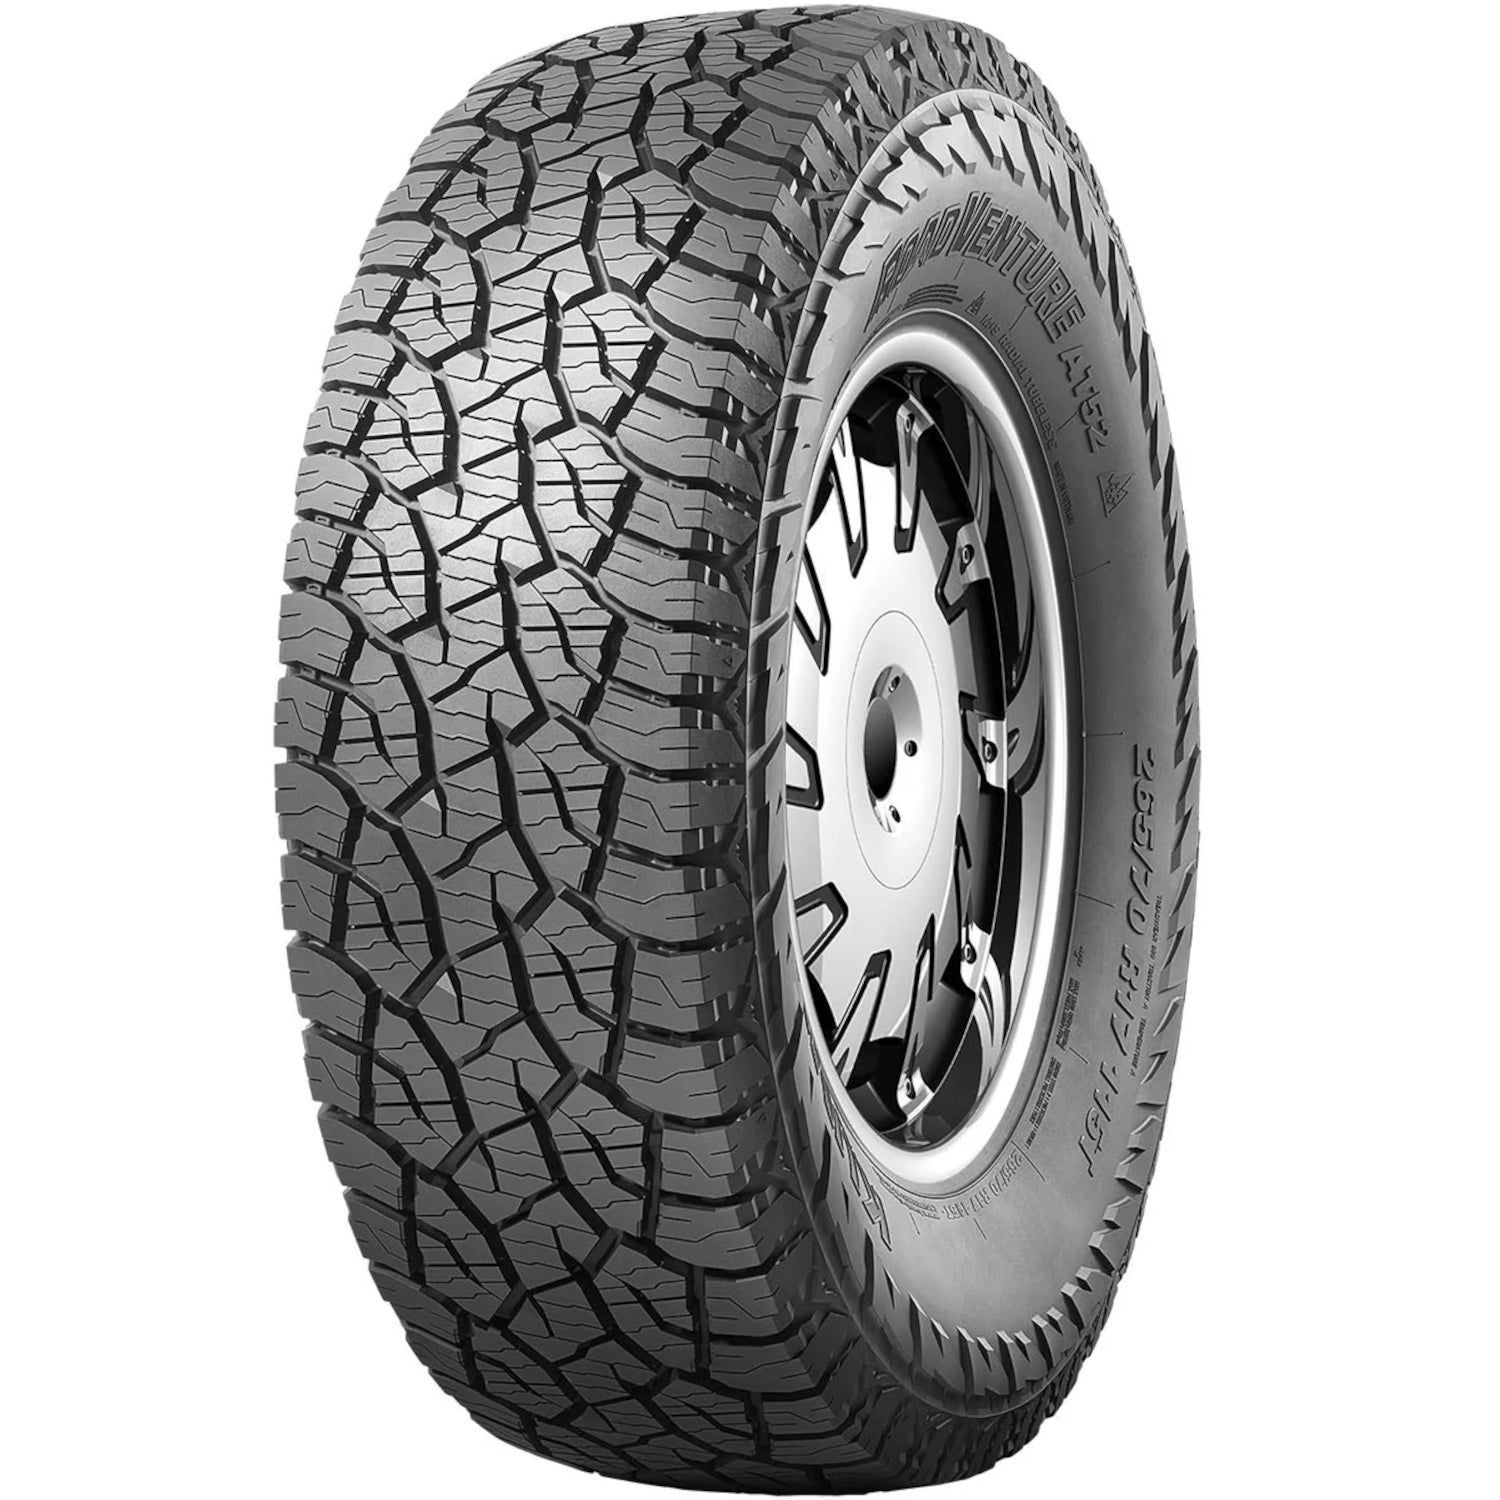 KUMHO ROAD VENTURE AT52 265/70R16 (30.6X10.4R 16) Tires